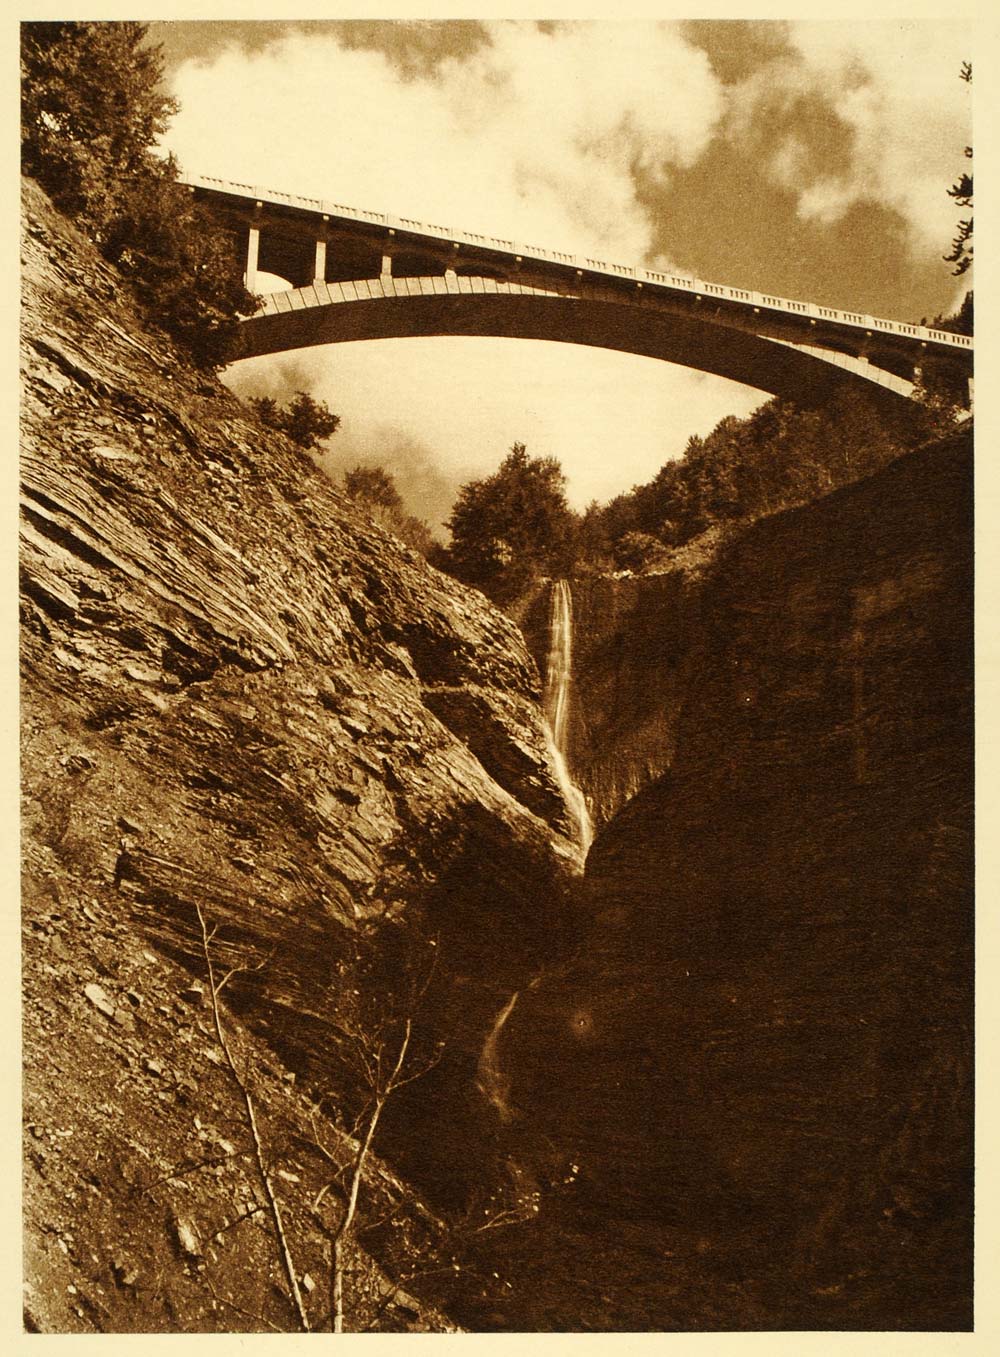 1932 Photogravure Valea Prahova Valley River Viaduct Romania Carpathians RM4